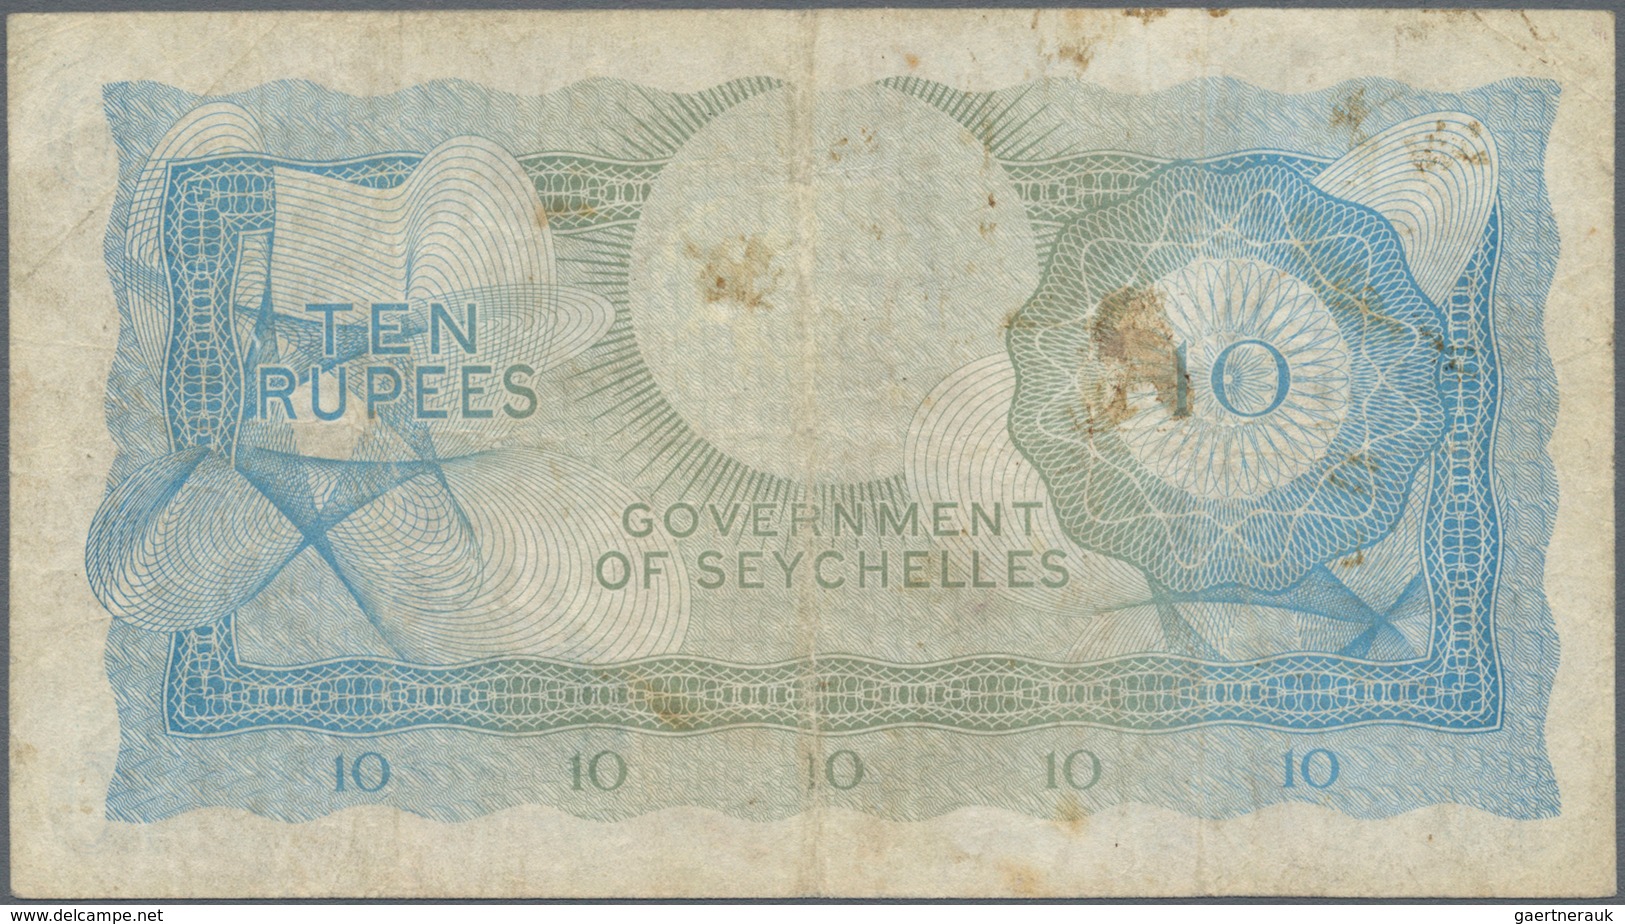 Seychelles / Seychellen: Government Of Seychelles 10 Rupees 1974, P.15b, Still Nice With Several Fol - Seychellen